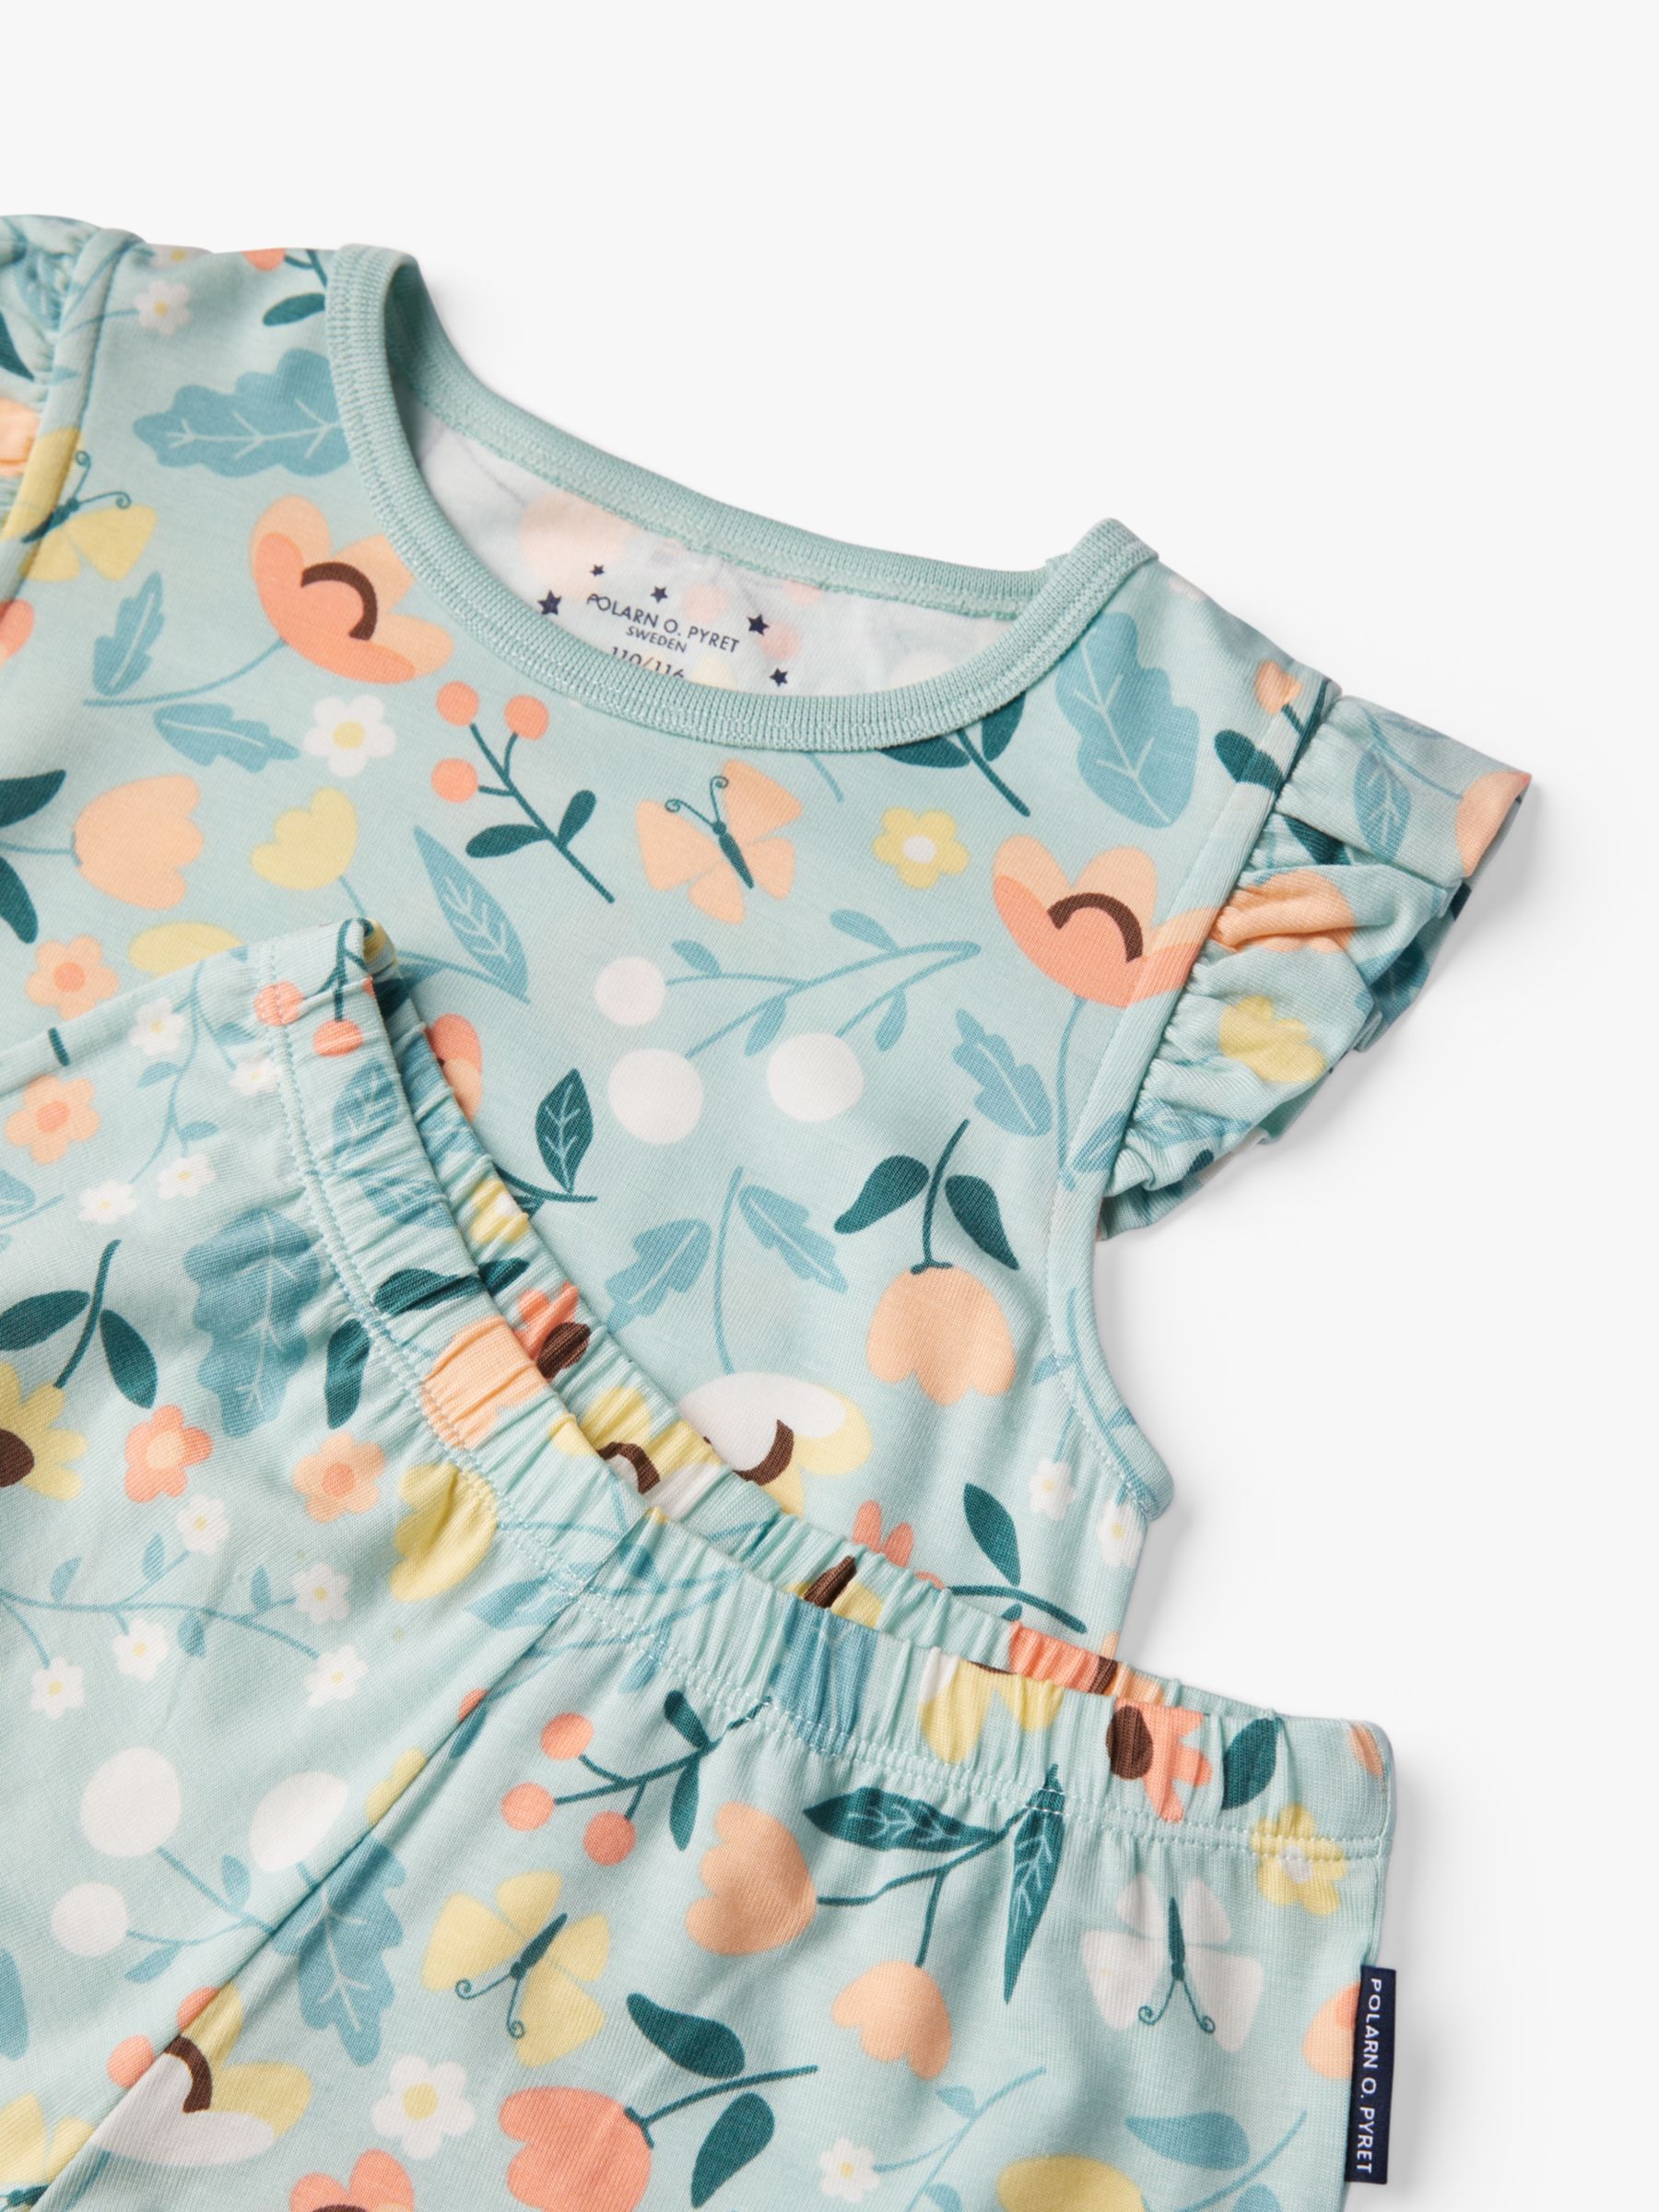 Polarn O. Pyret Kids' Floral Short Pyjamas, Blue/Multi, 1-2 years